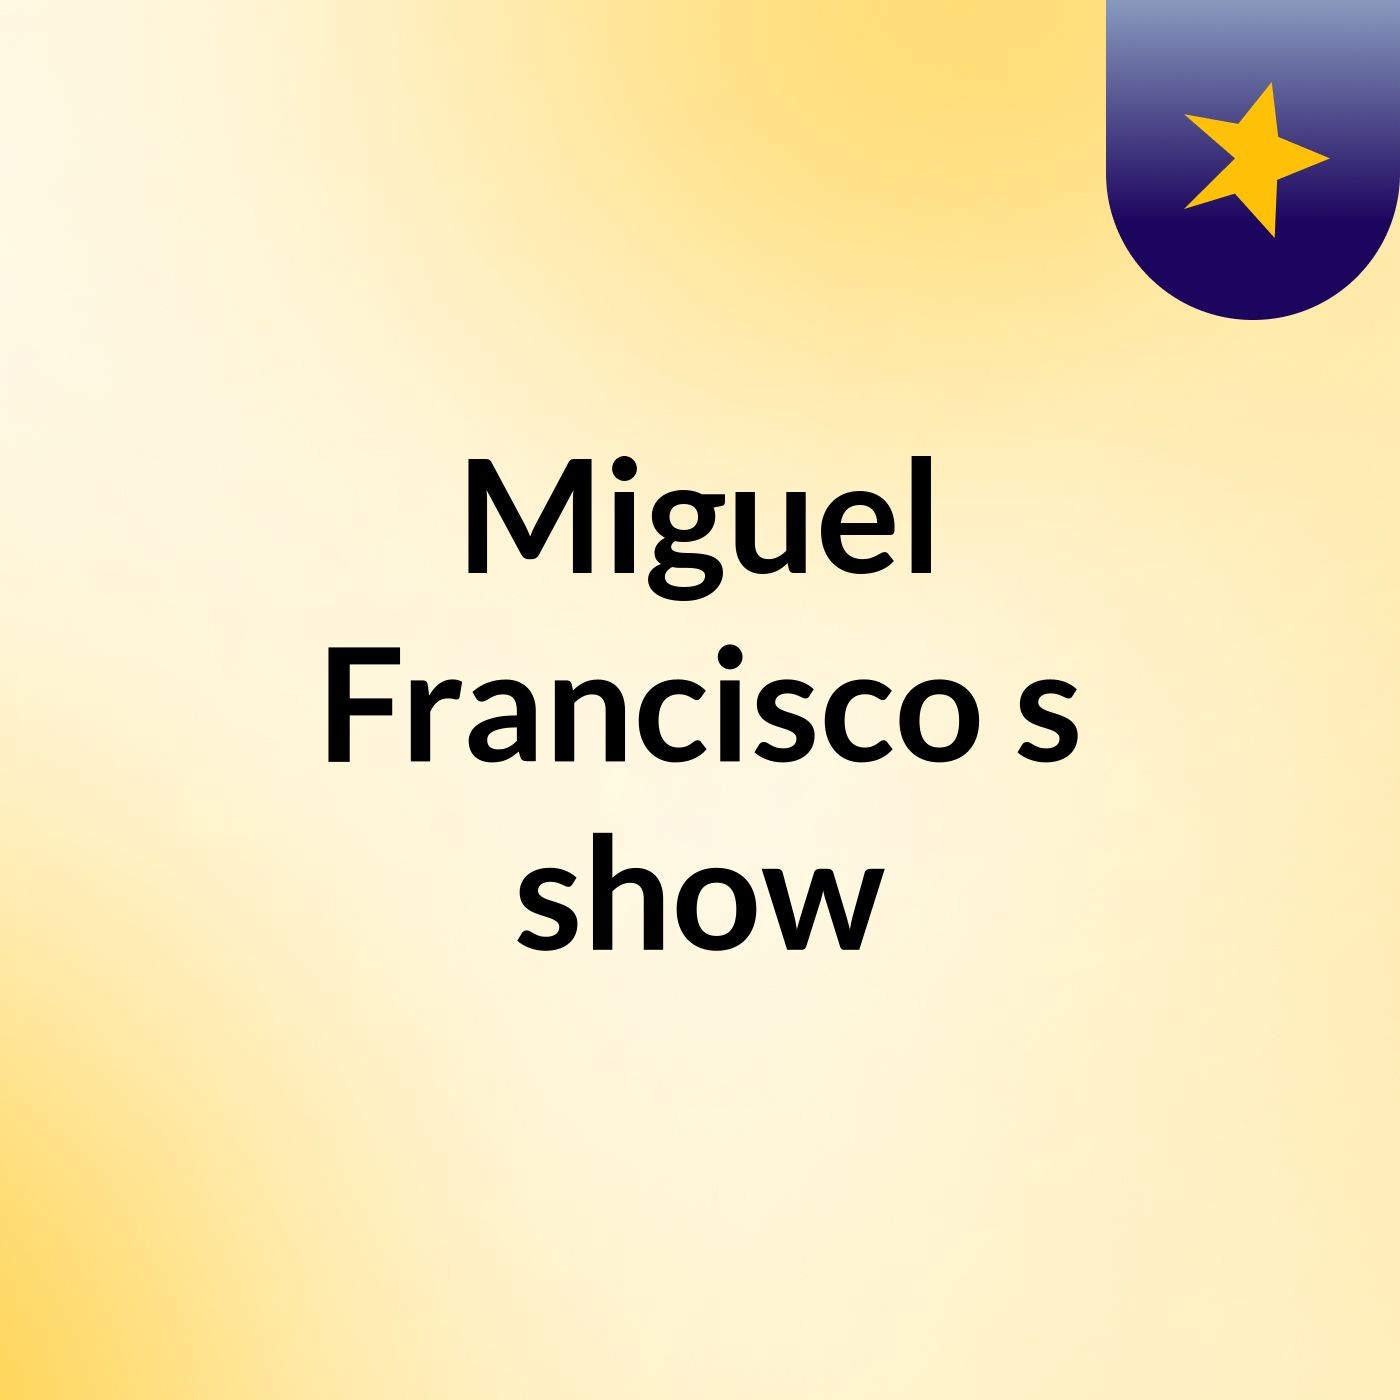 Miguel Francisco's show